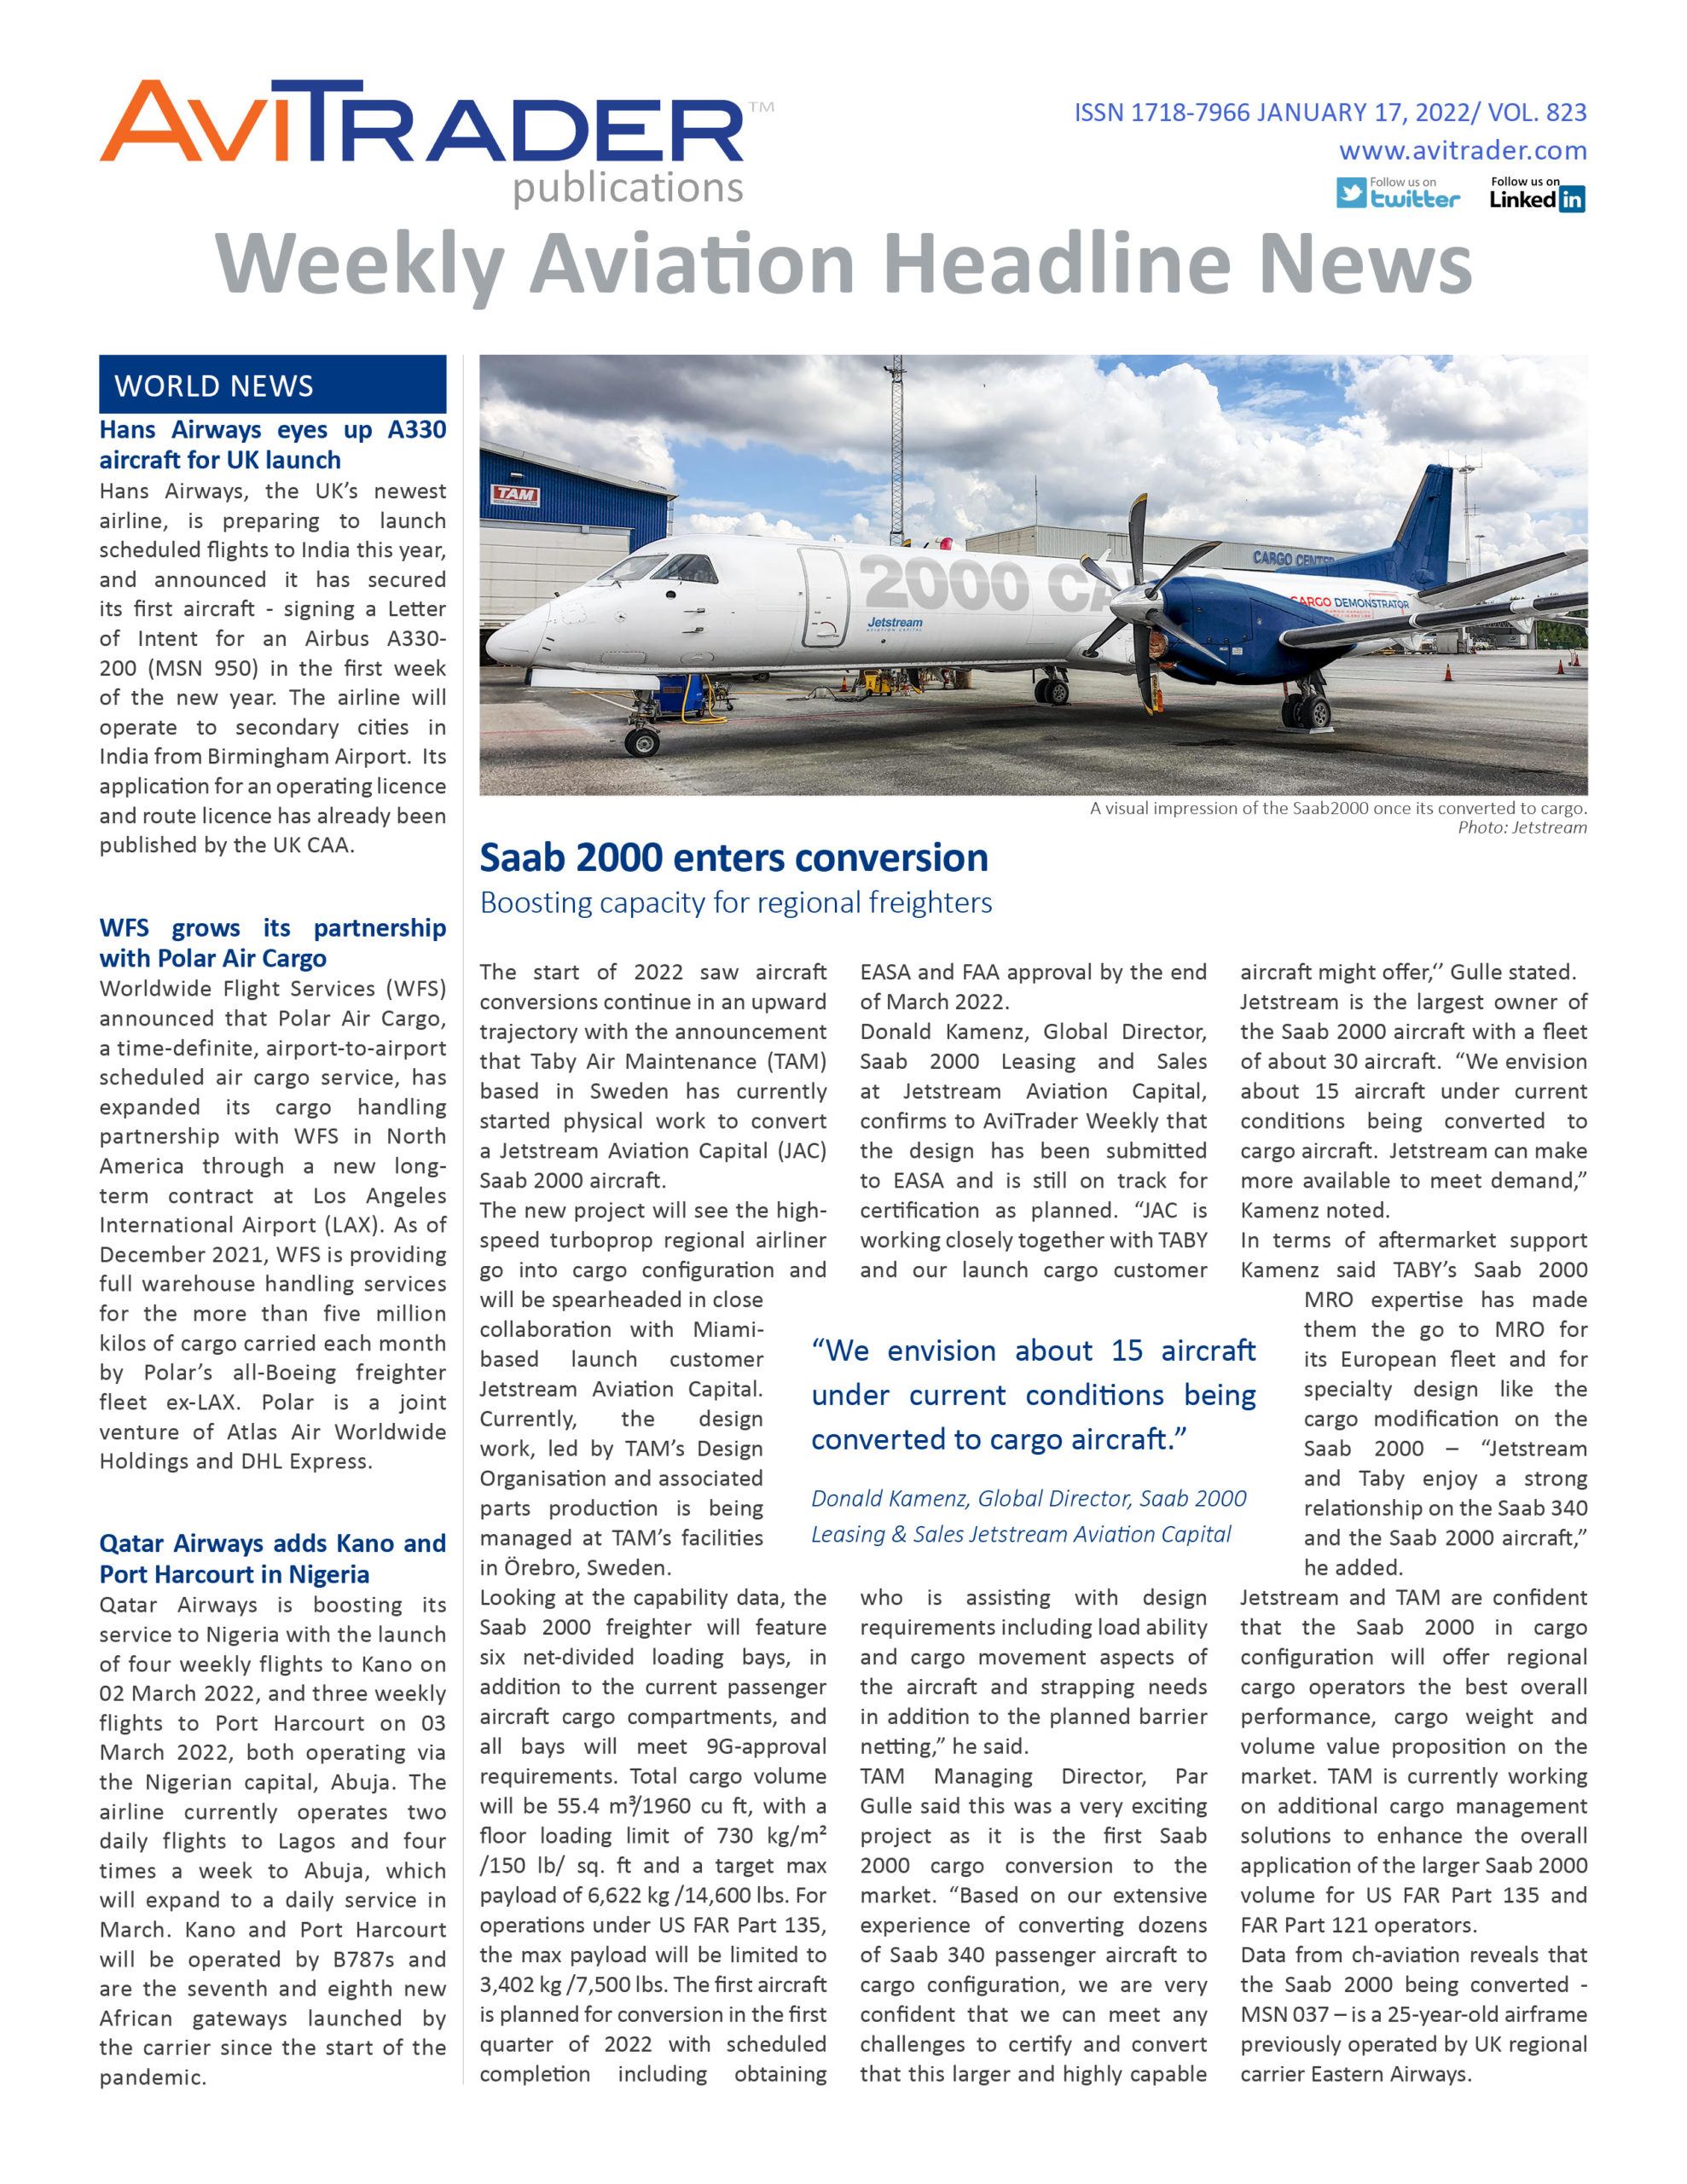 AviTrader_Weekly_Headline_News_Cover_2022-01-17